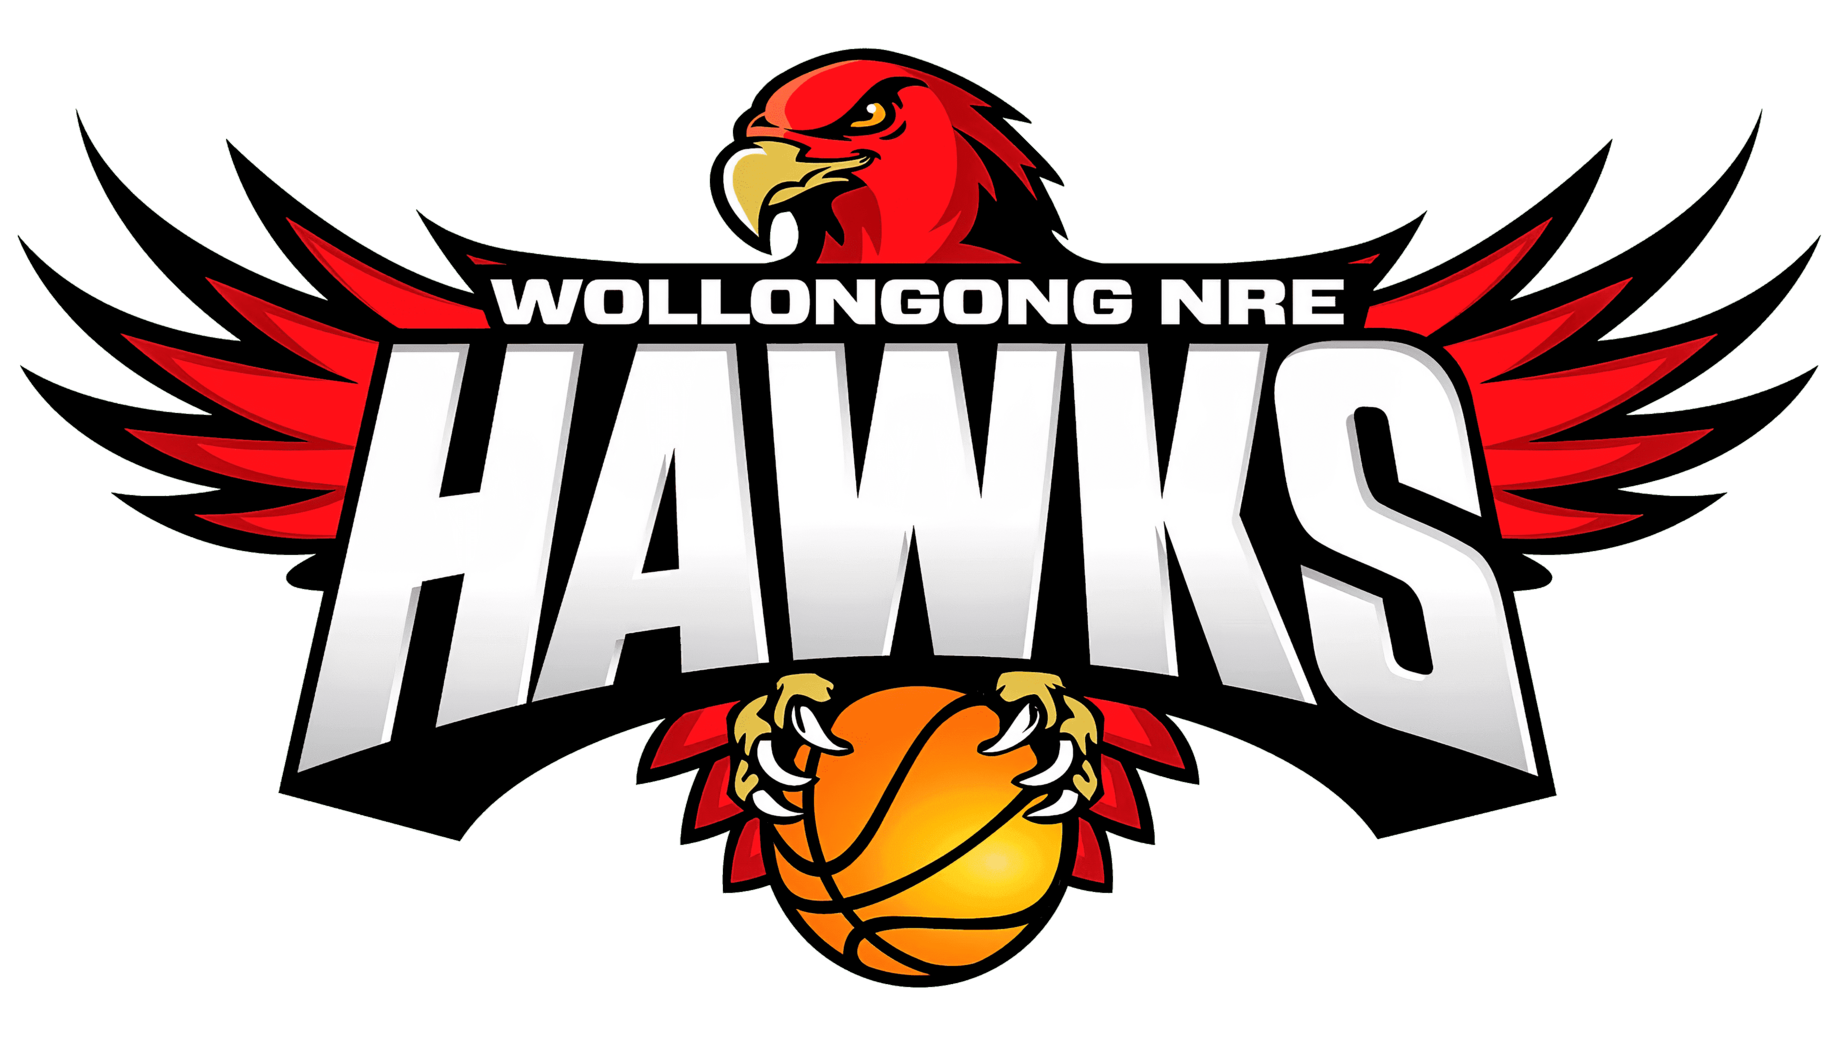 Illawarra hawks logo